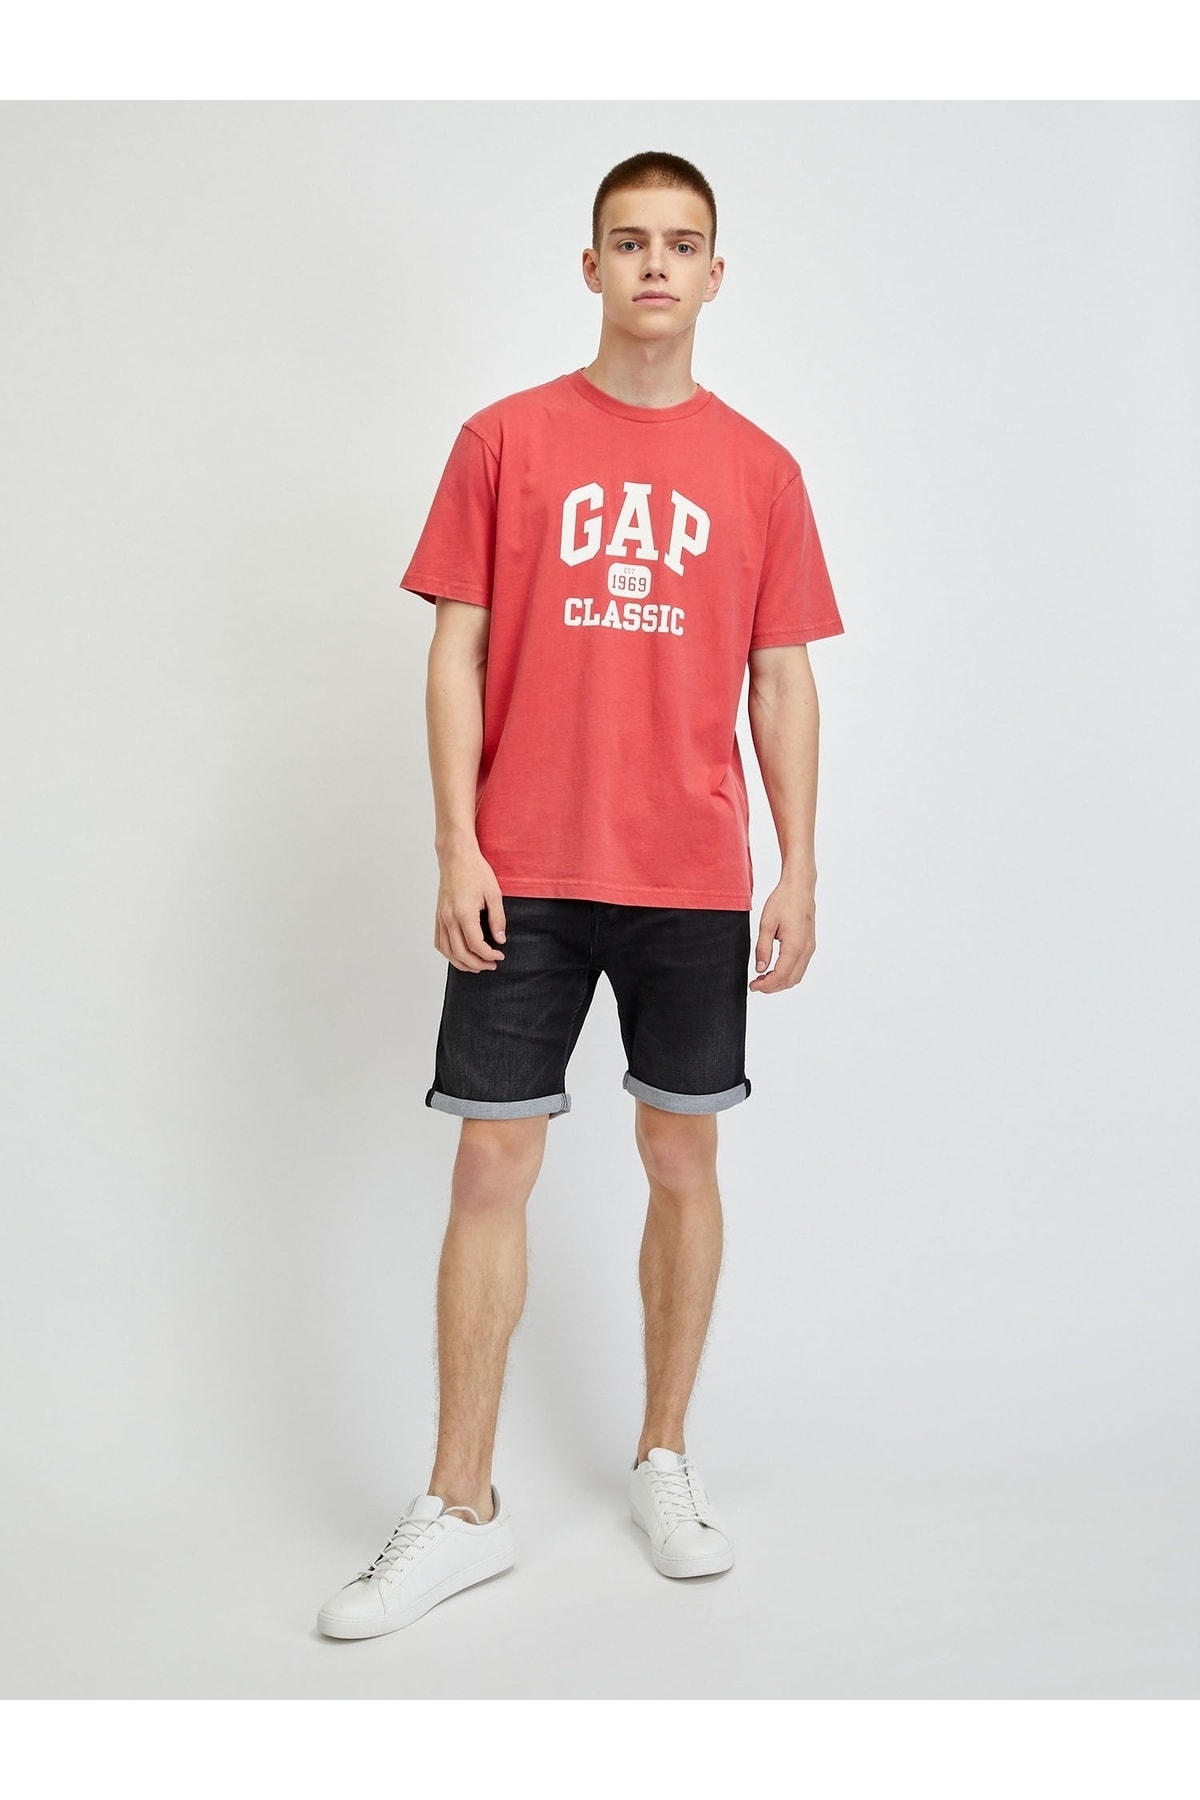 GAP Erkek Kırmızı %100 Organik Pamuk Logo T-shirt PG6988